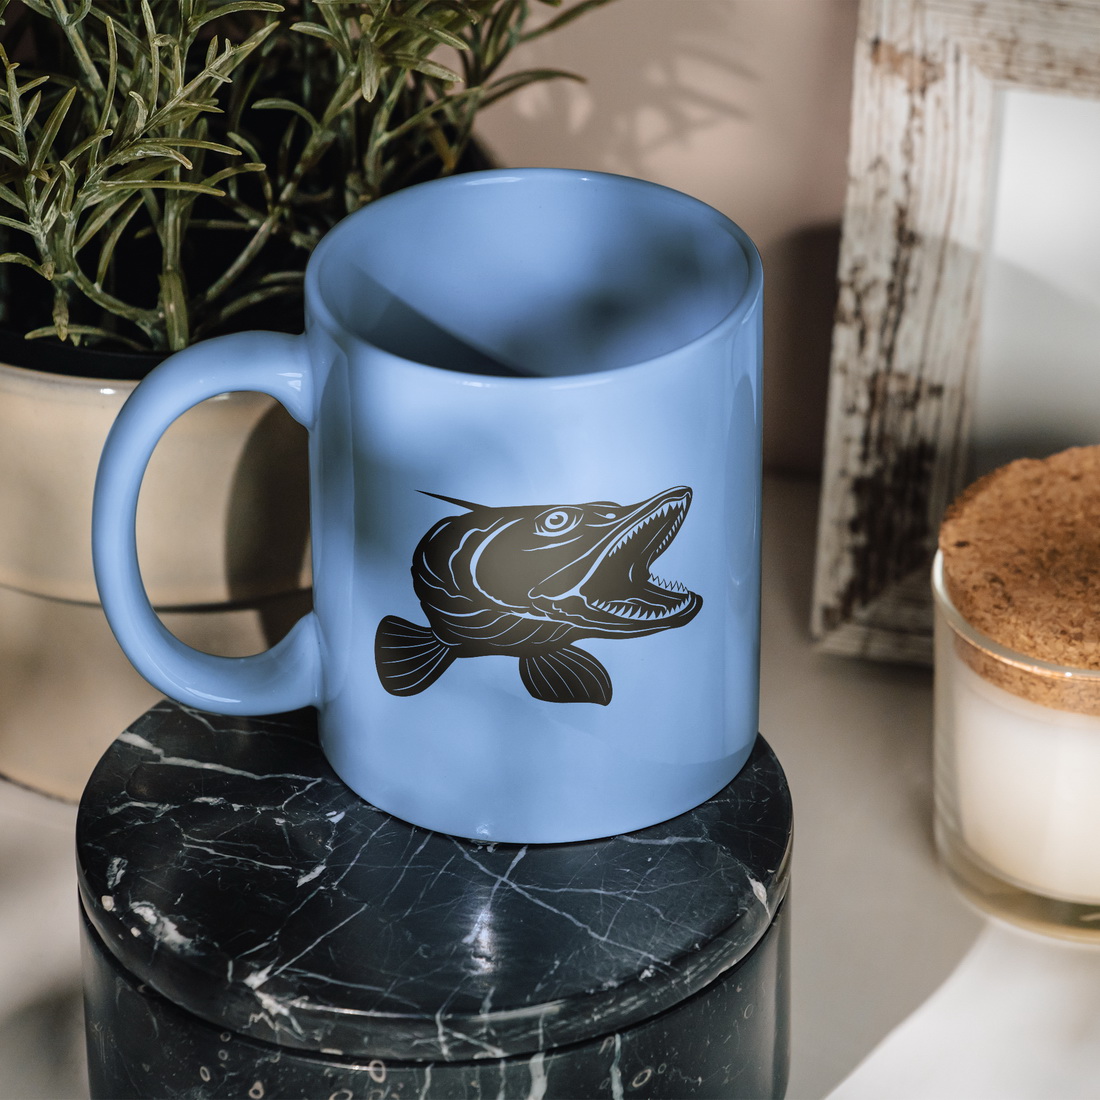 Blue coffee mug with a fish on it.